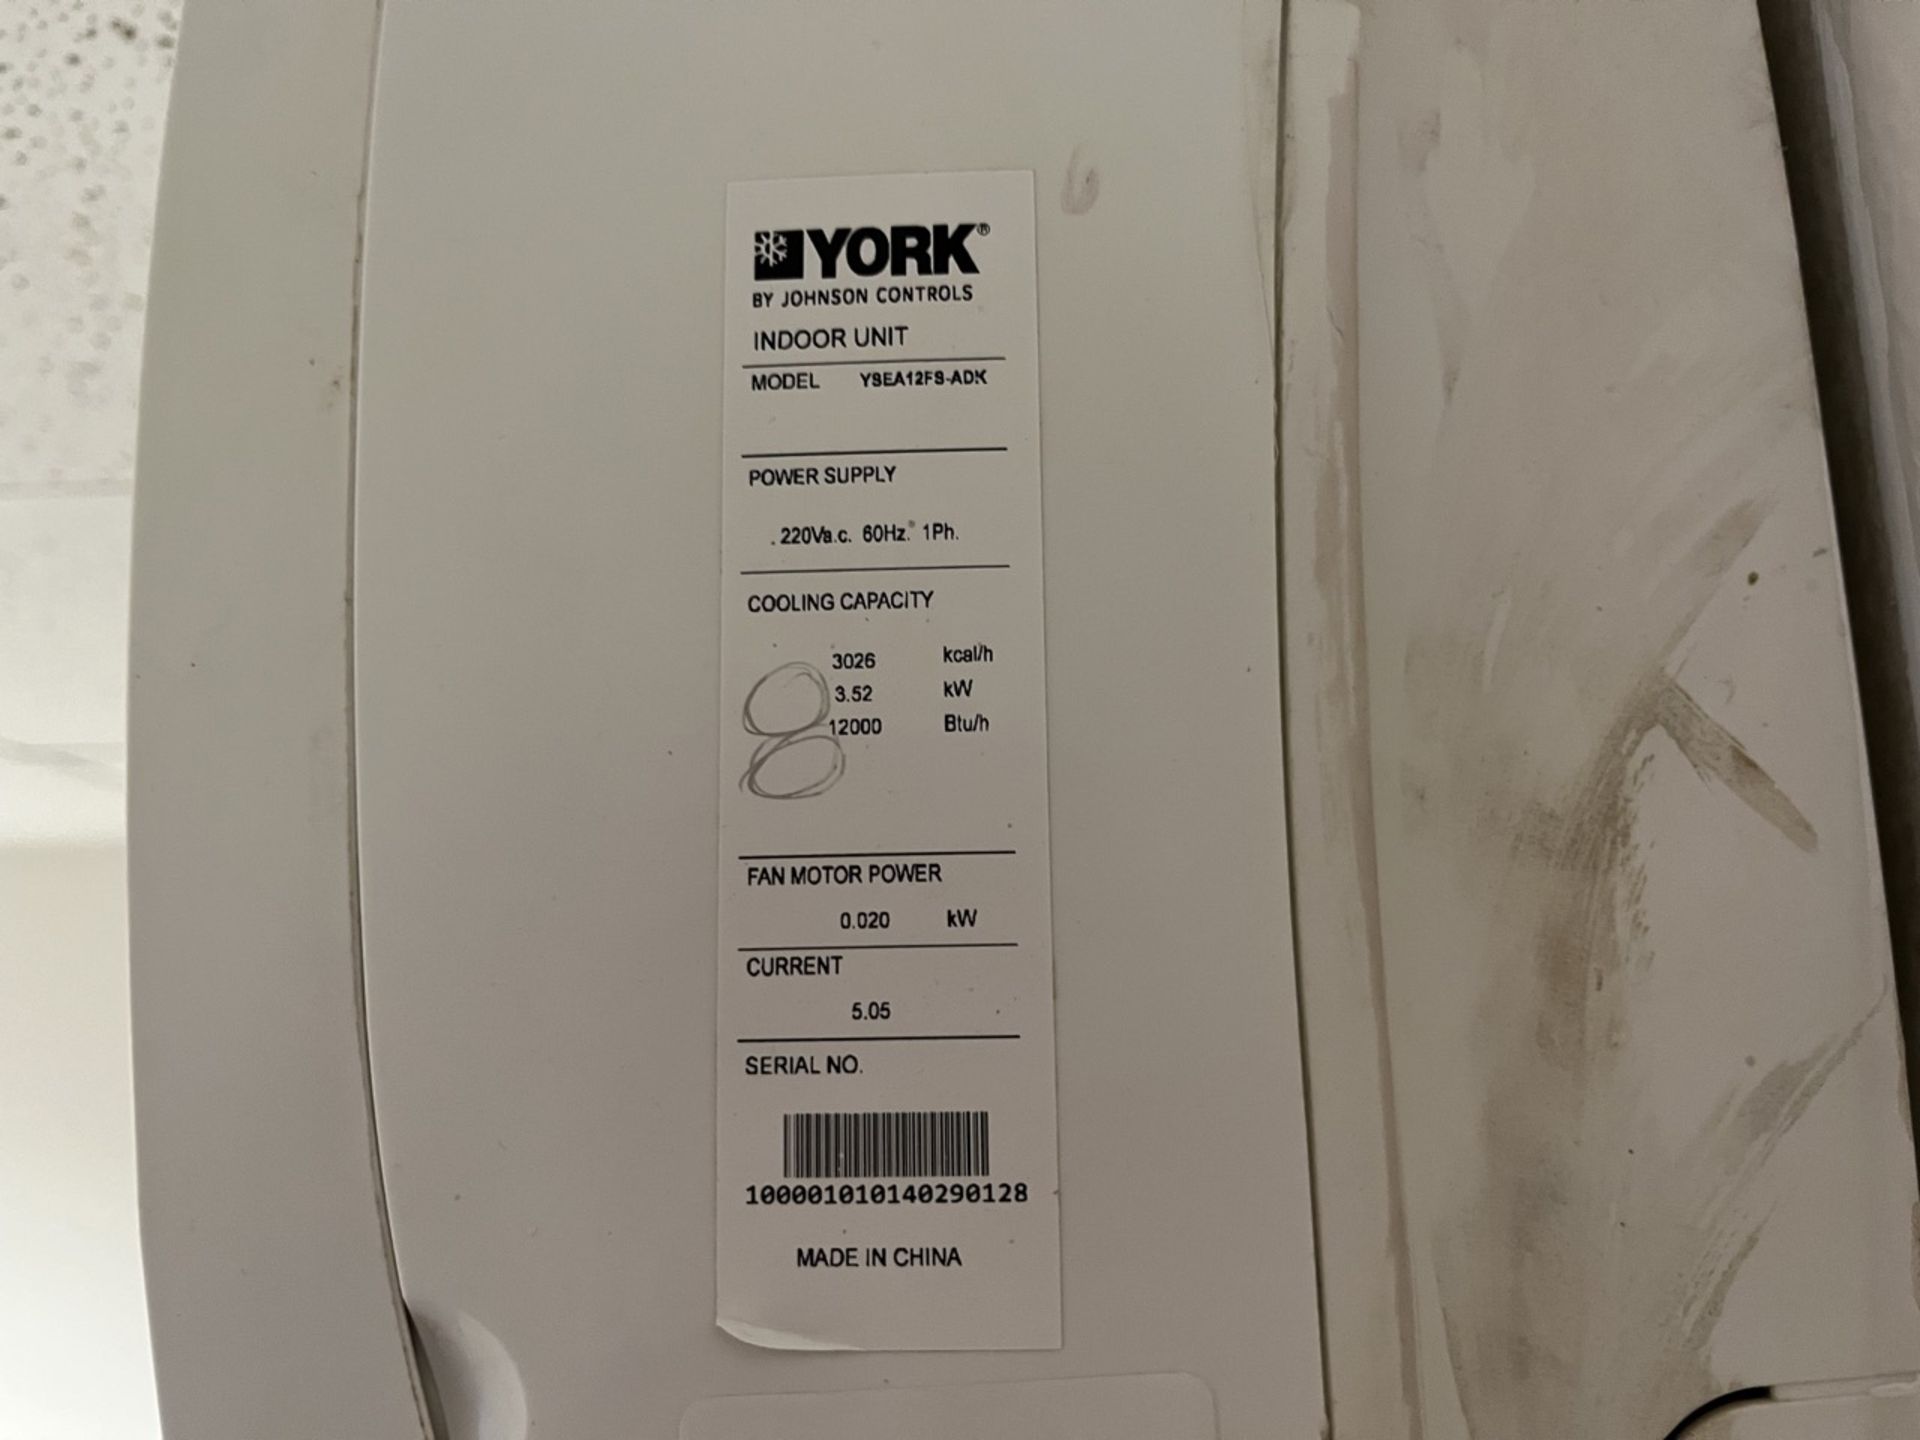 York minisplit air conditioner with control, Model YSEA12FS-ADK, Series 100001010140290128, 220 Vol - Image 6 of 11